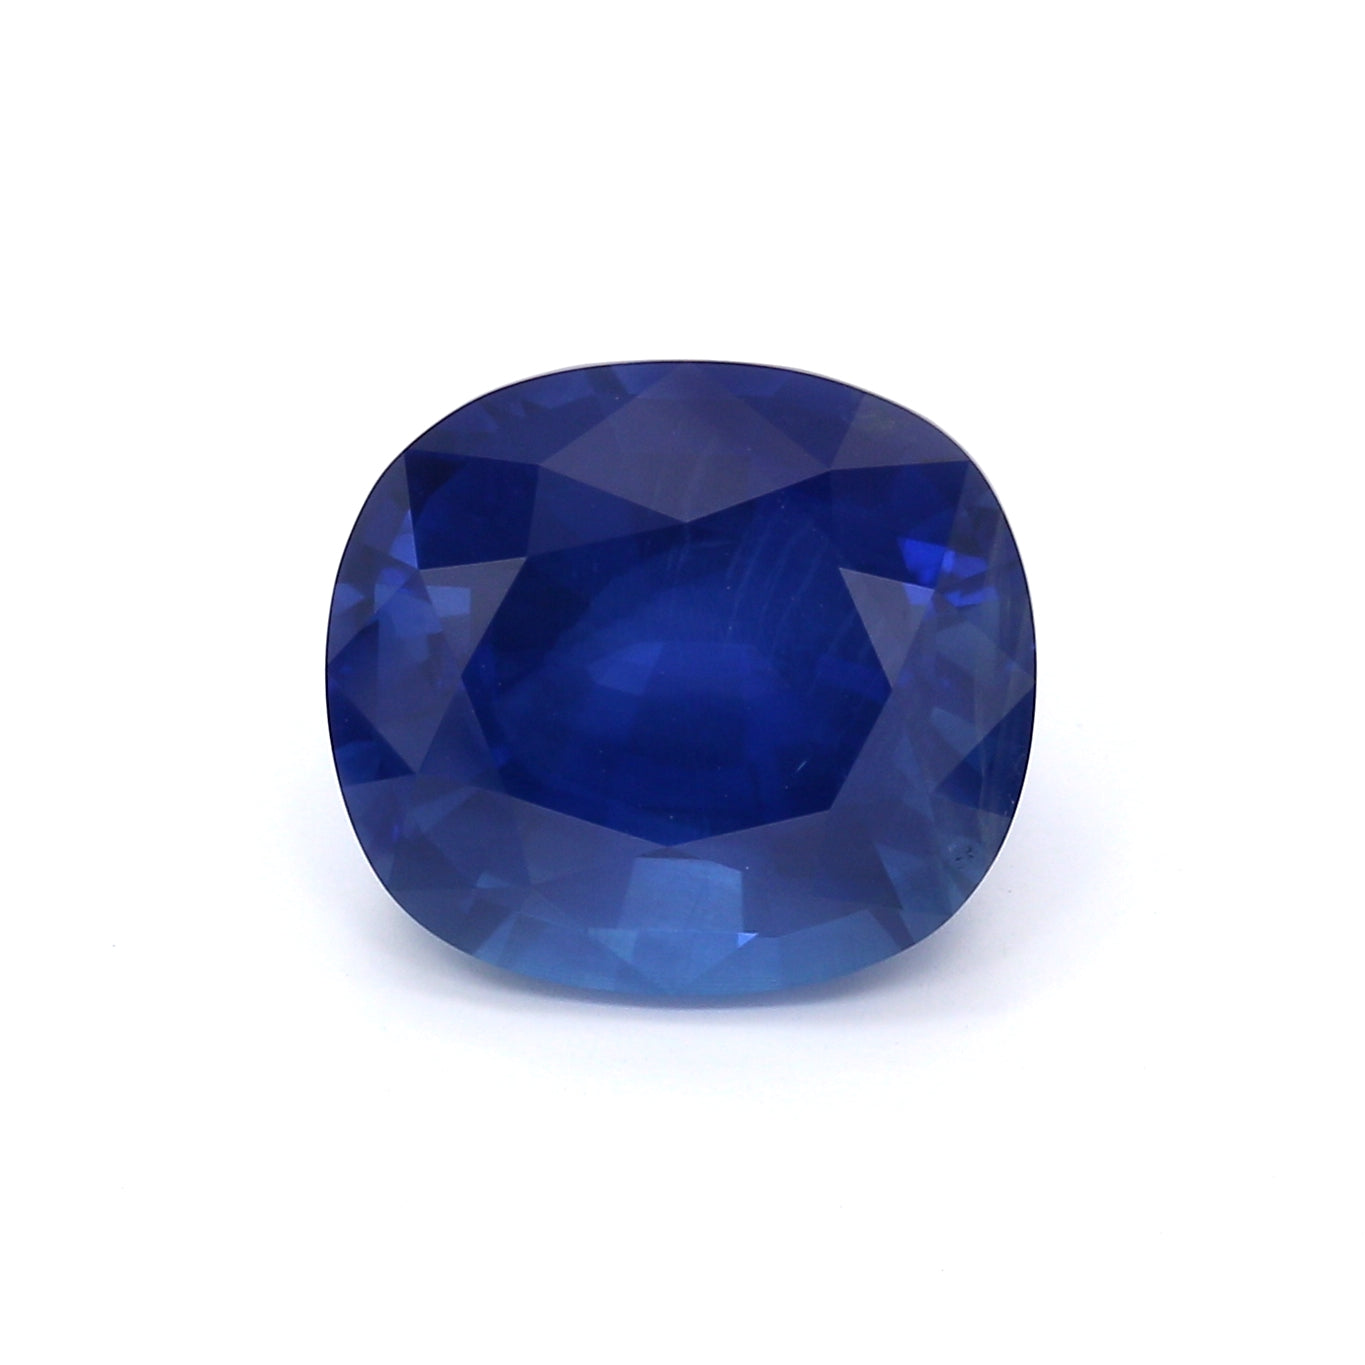 8.53ct Vivid, Royal Blue, Cushion Sapphire, Heated, Sri Lanka - 12.31 x 11.09 x 7.71mm